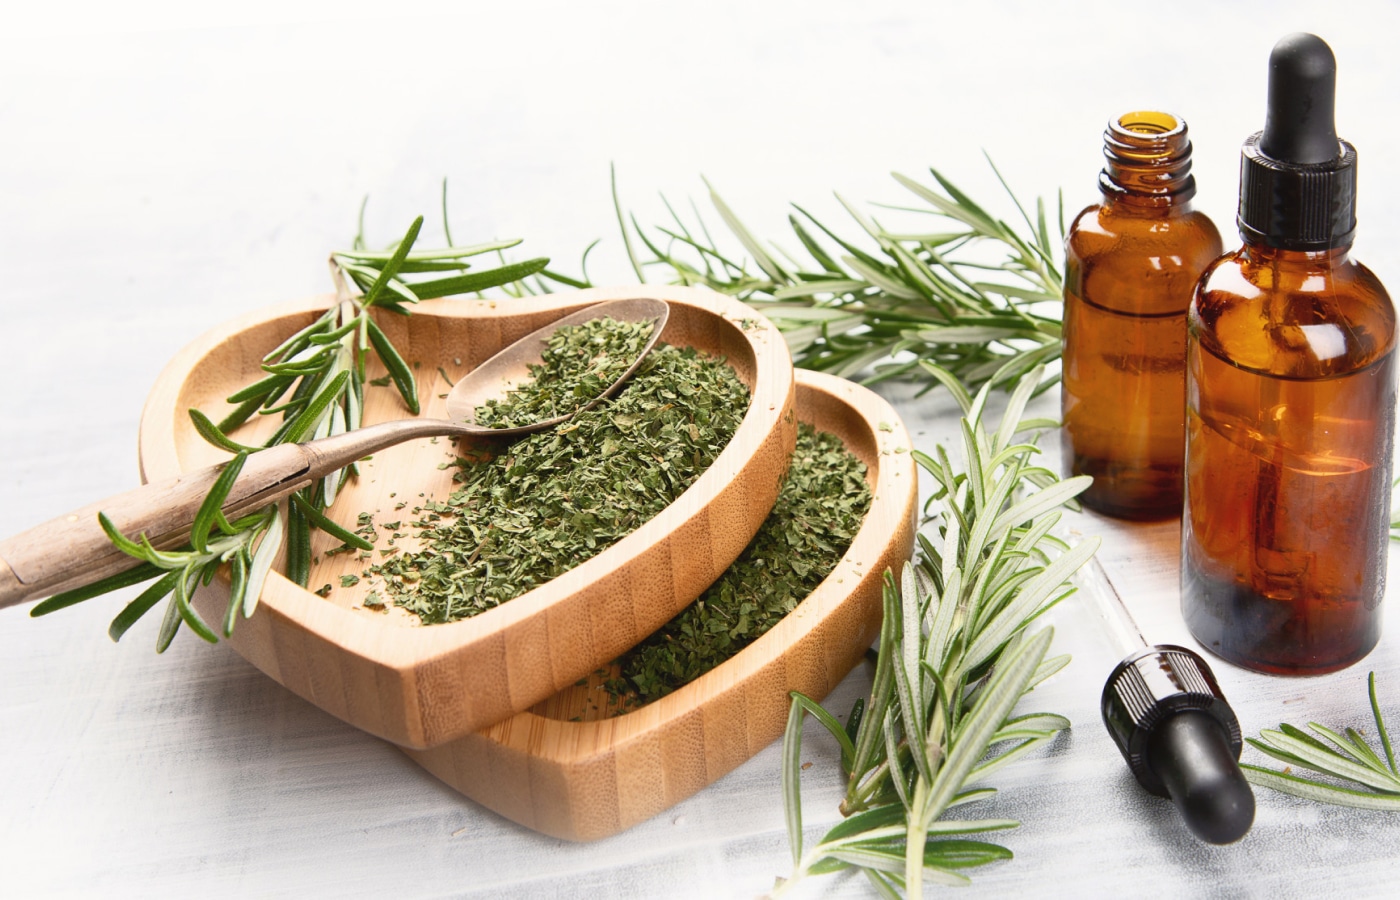 Rosemary essential oil